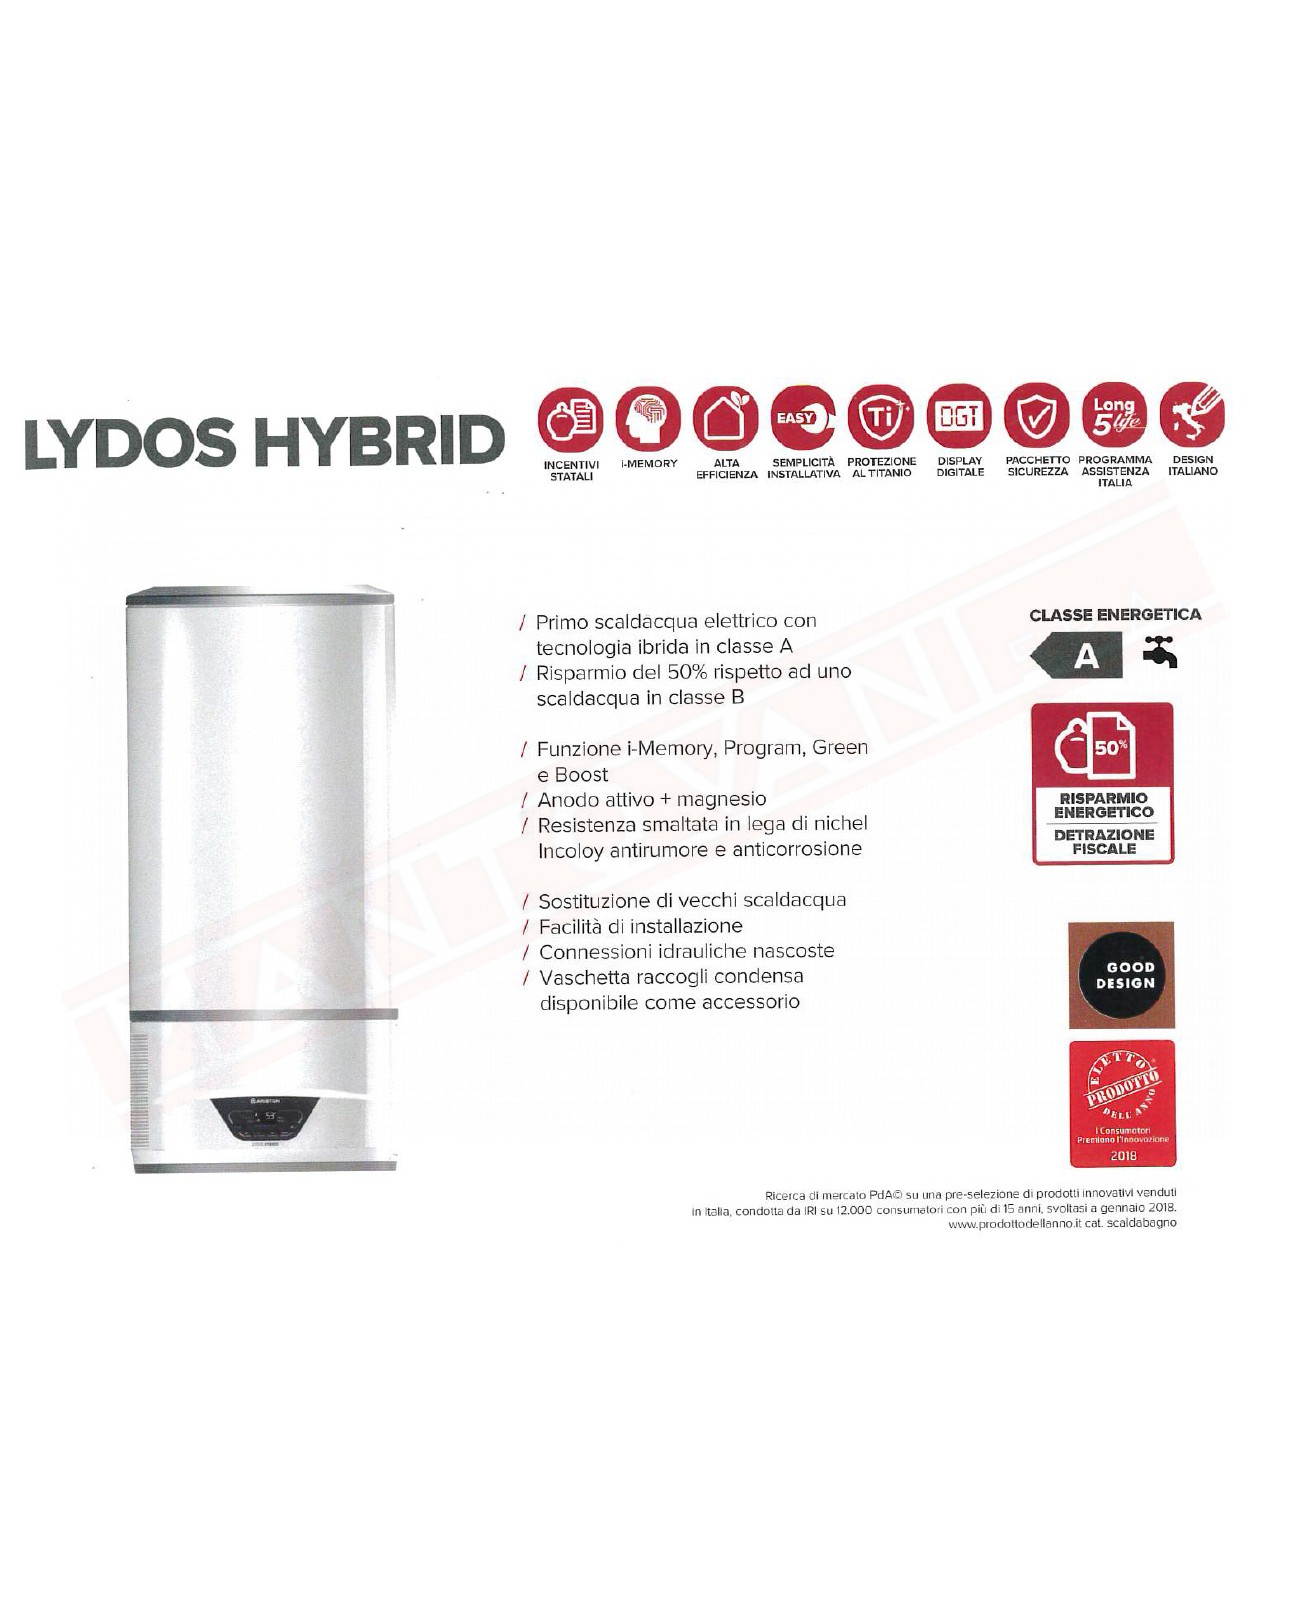 Ariston scaldabagno lydos hybrid 100 classe energetica A diametro 465 h 1153 senza vascetta per condensa classe energ a